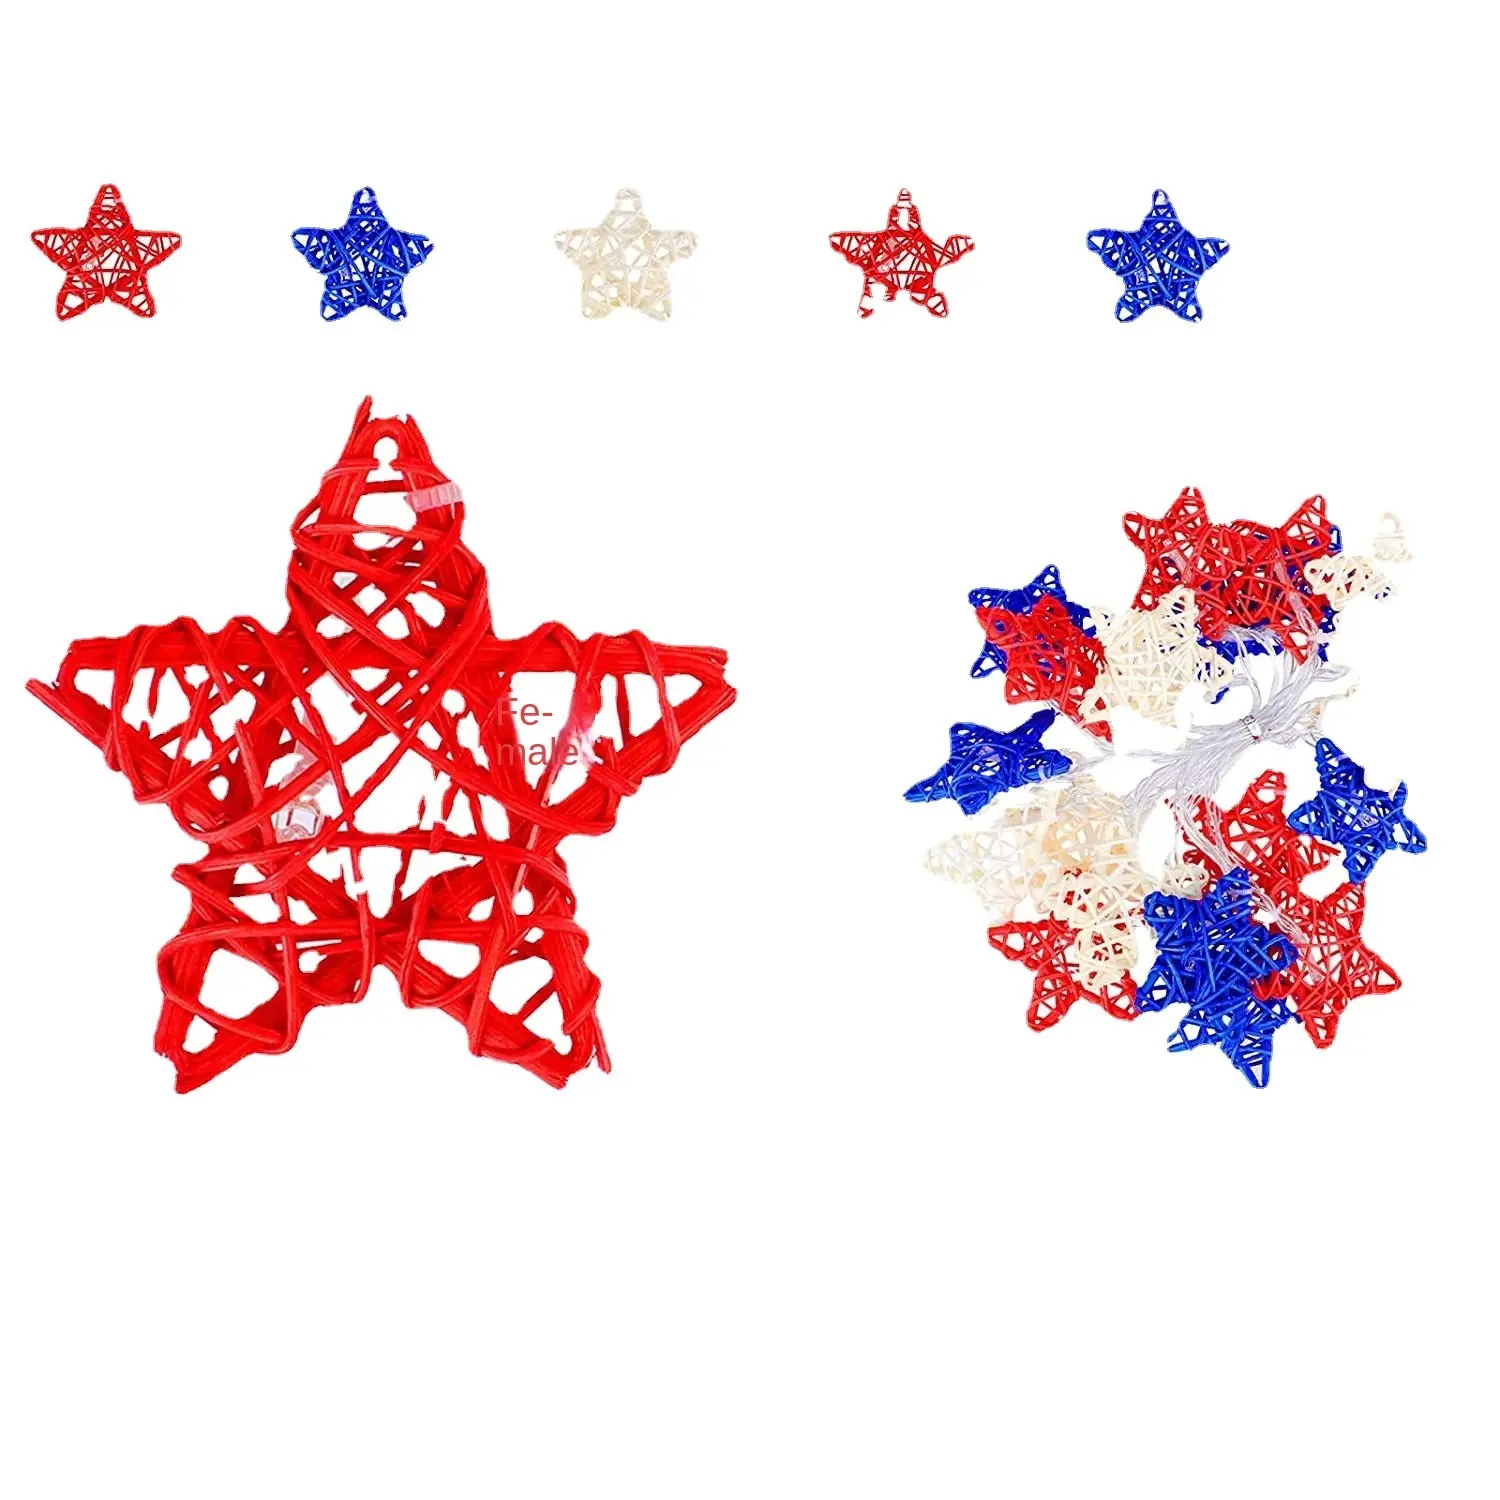 Lampu dekorasi led bintang lima titik rotan tali Hari Kemerdekaan merah dan putih bola rotan biru natal